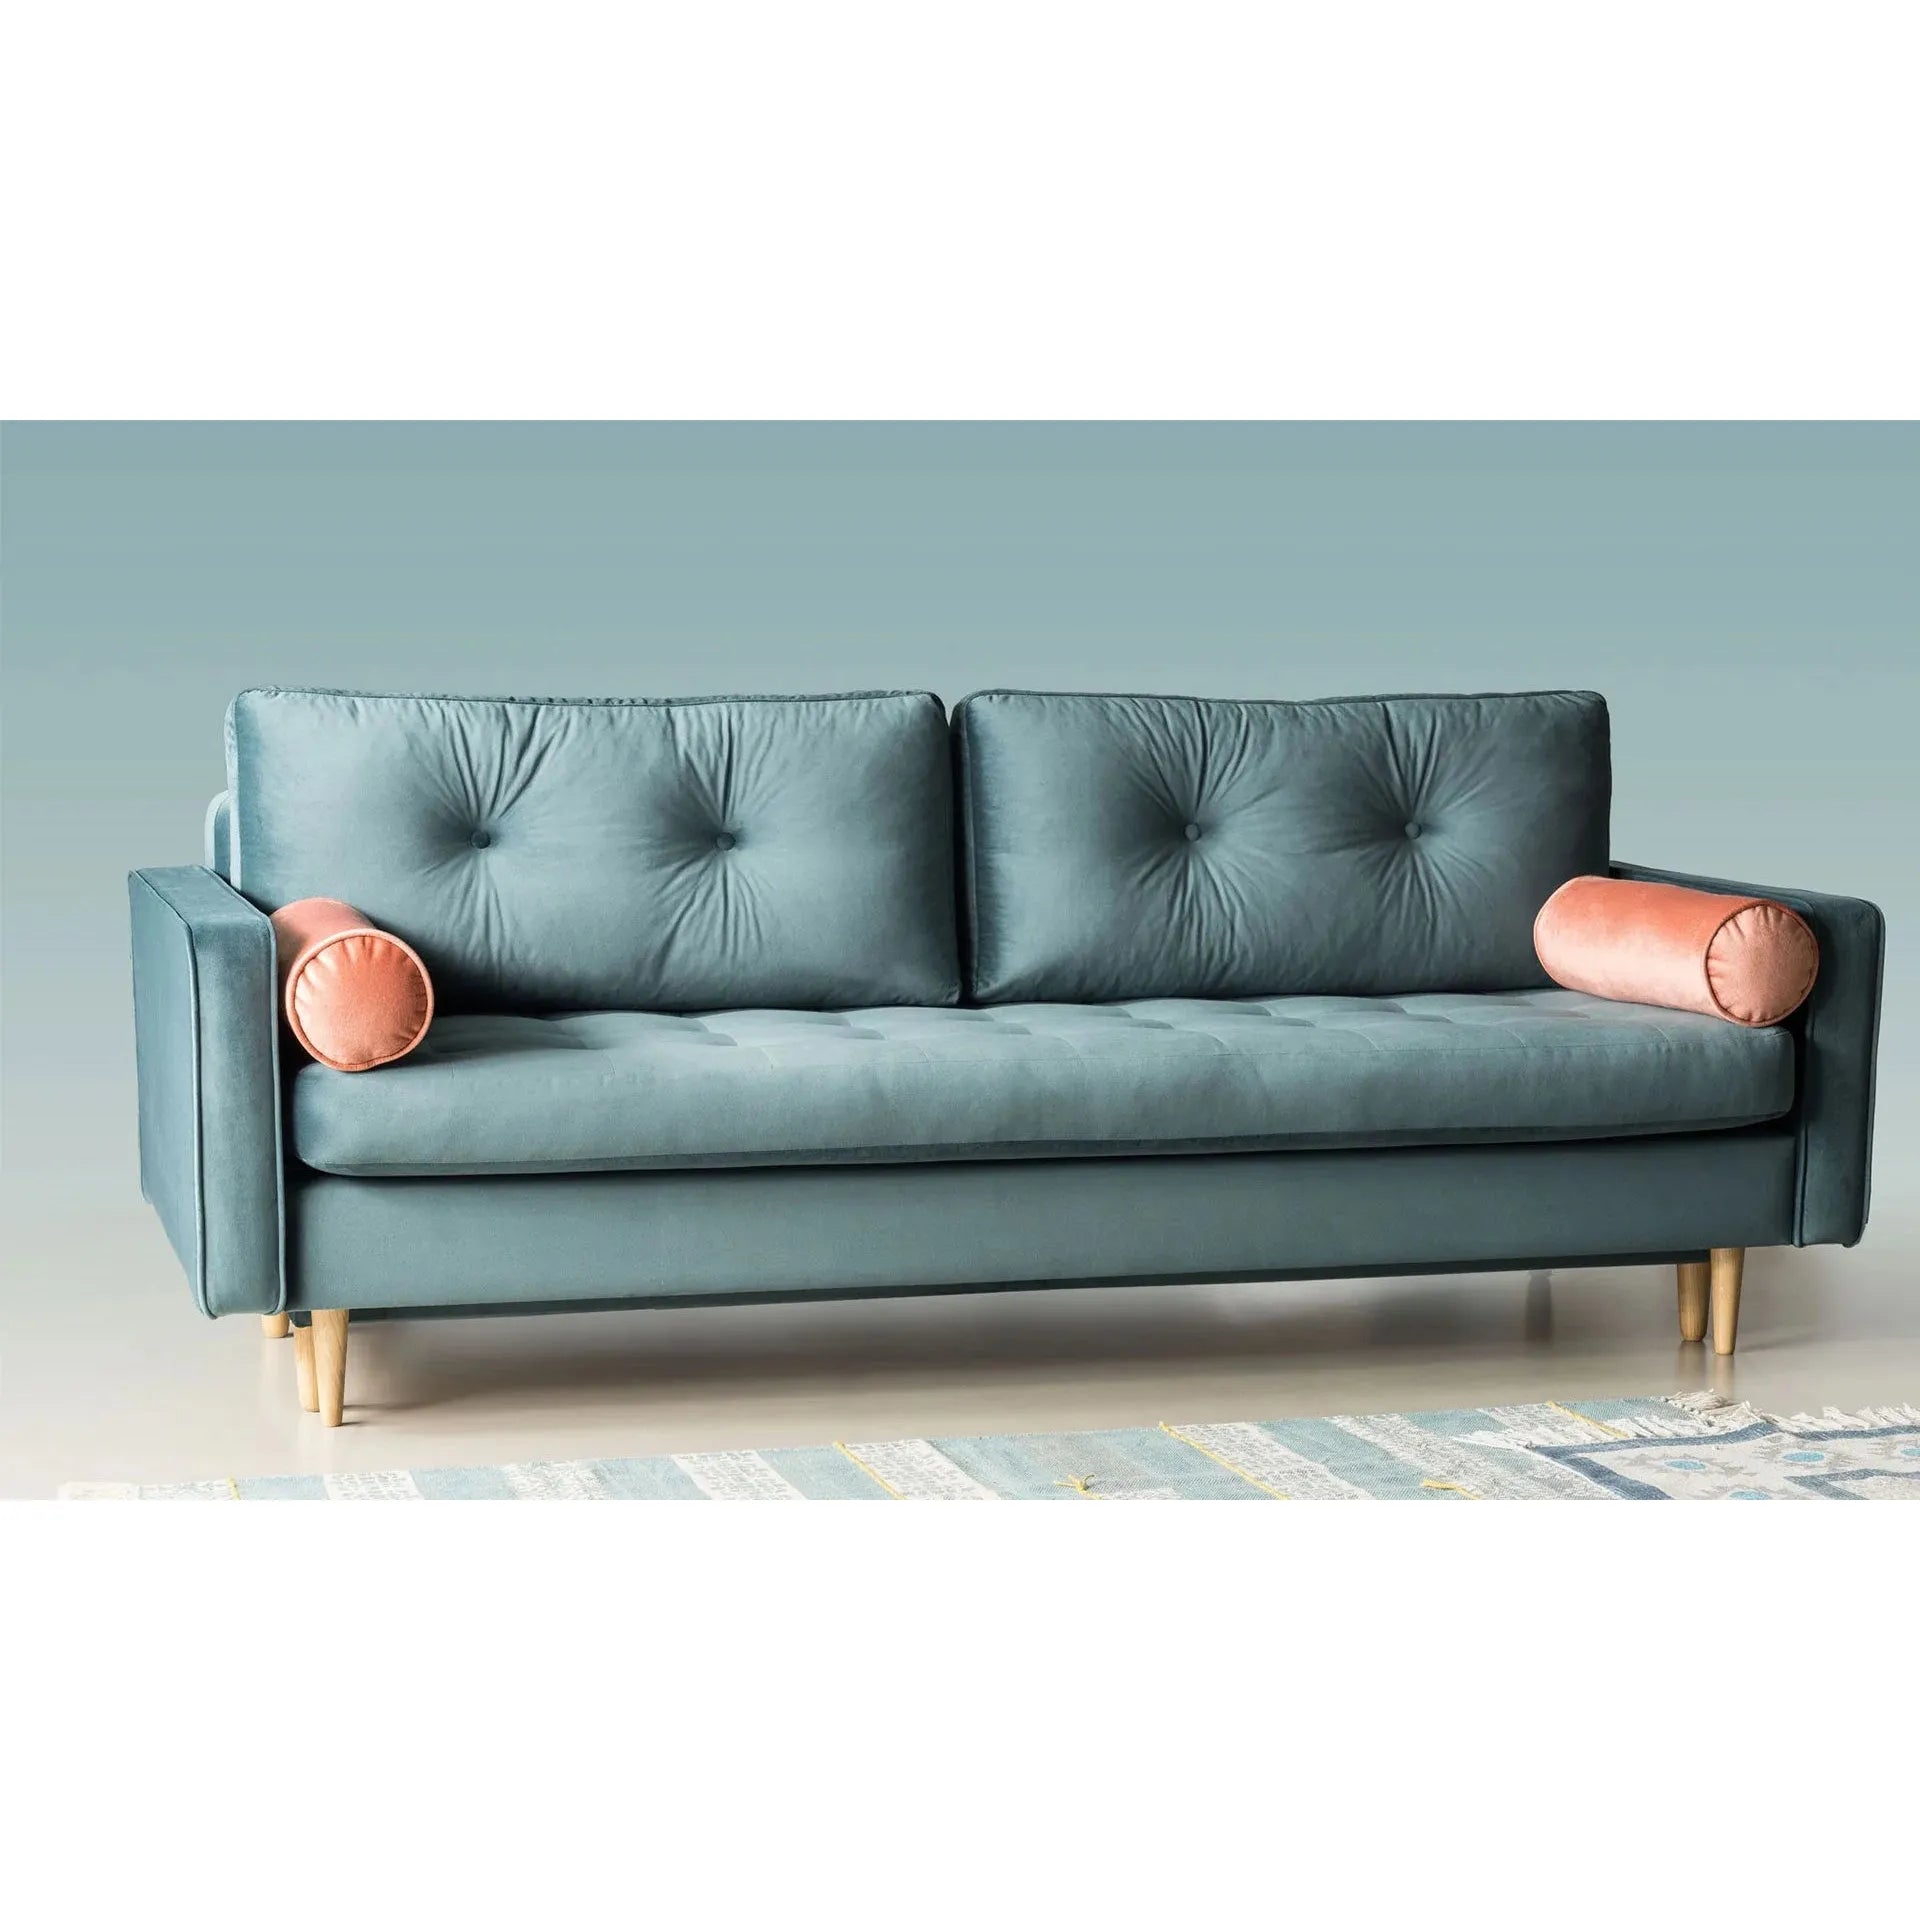 ESME dygsniuota 3 vietų sofa lova, pilka spalva